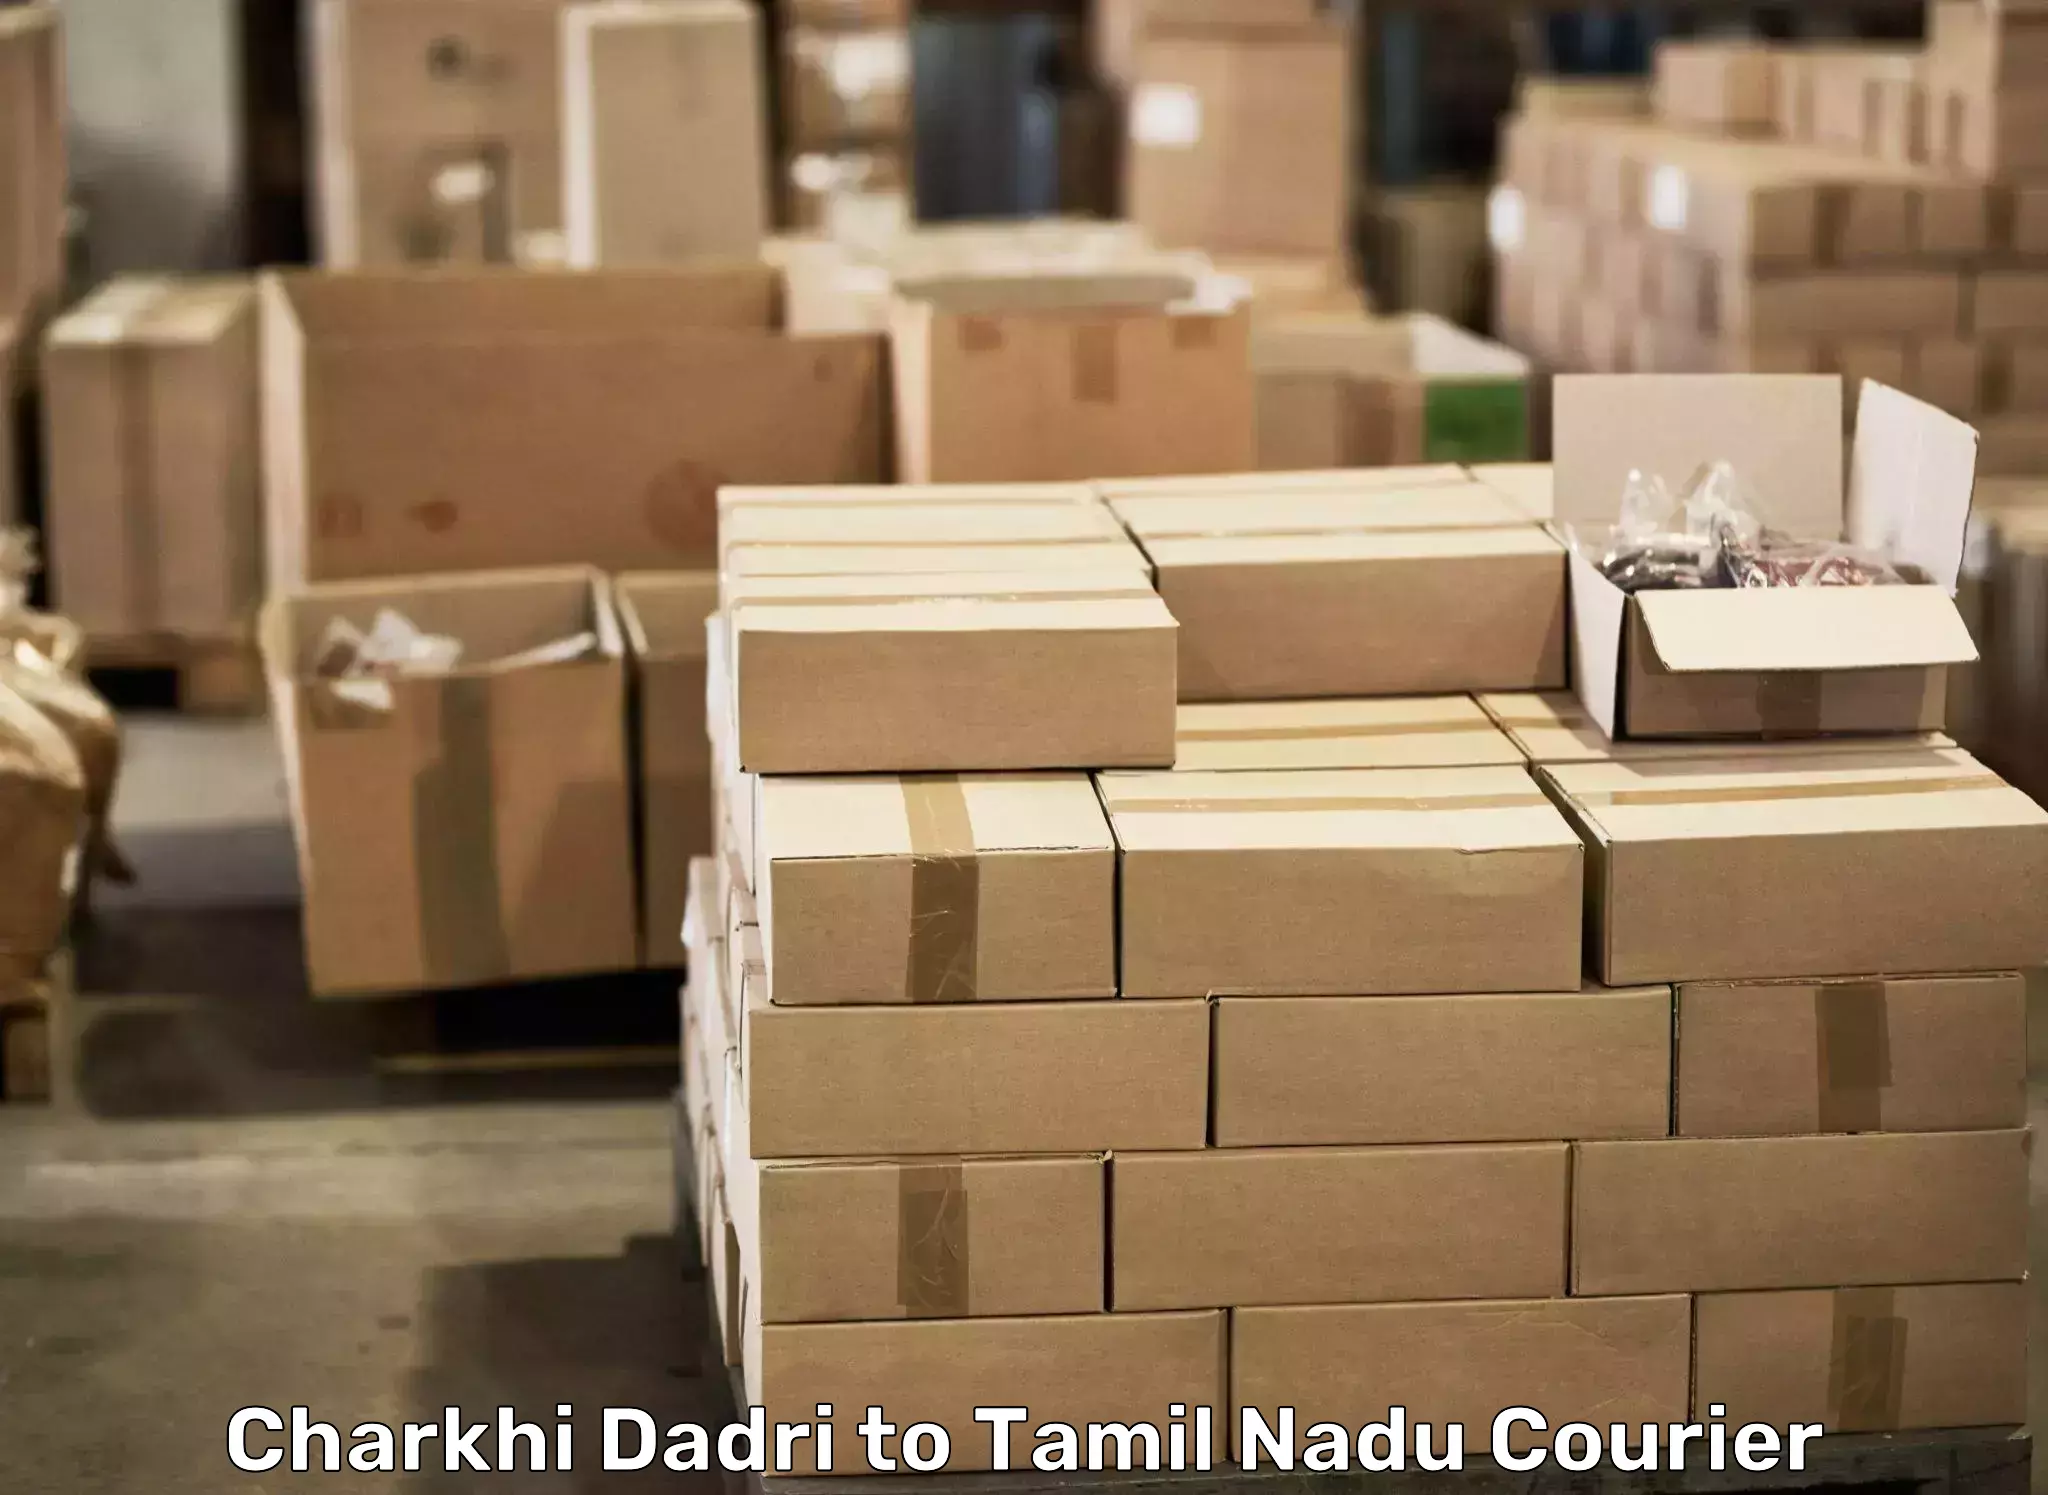 Quality moving company Charkhi Dadri to Tirunelveli